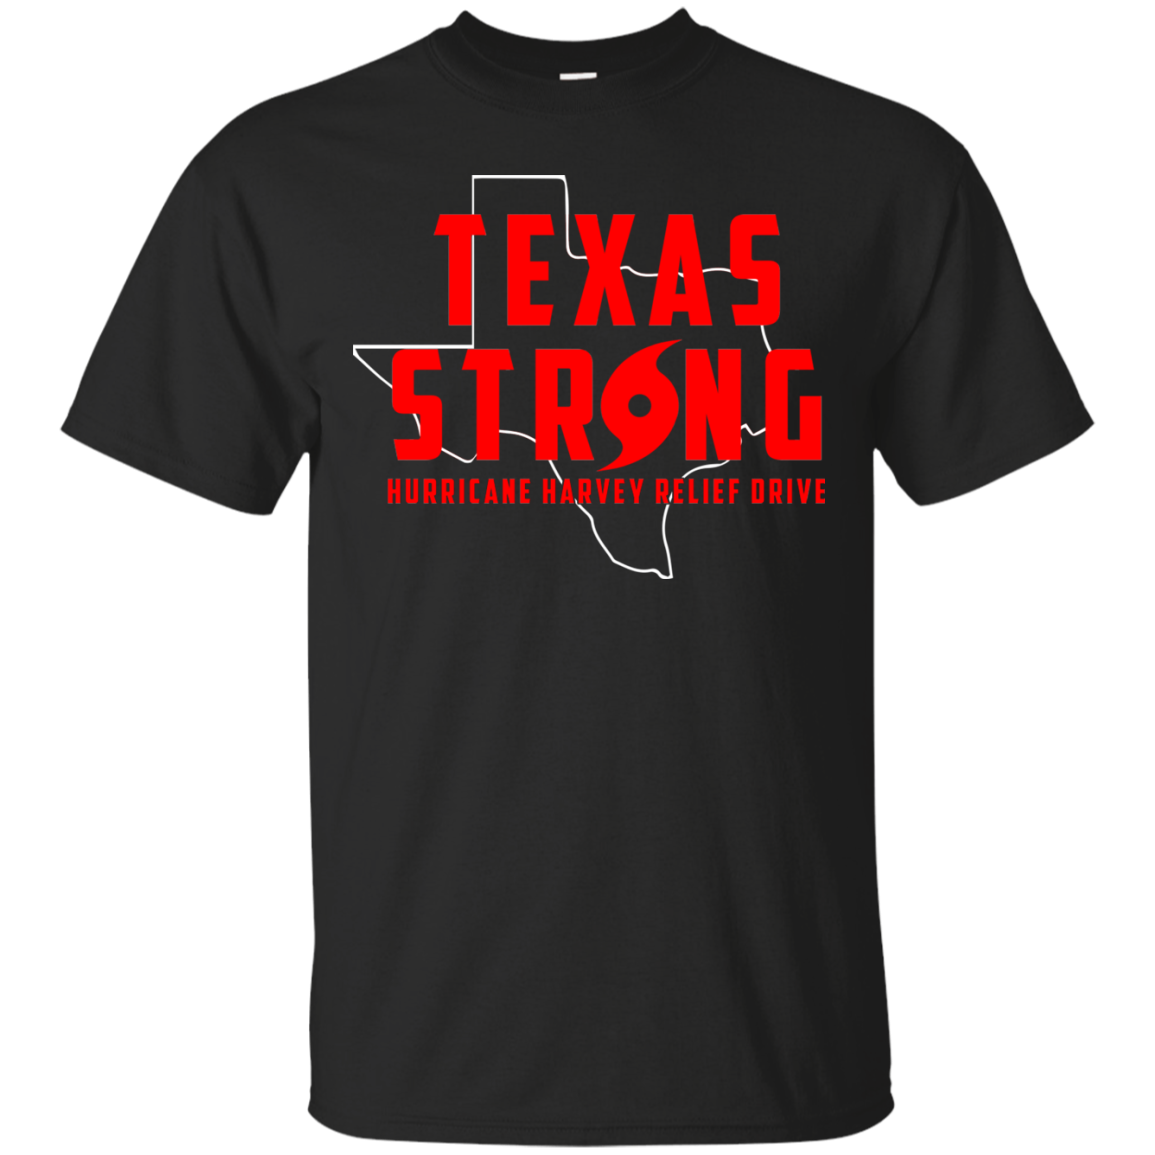 Texas Strong: Hurricane Harvey Relief Drive shirt, hoodie